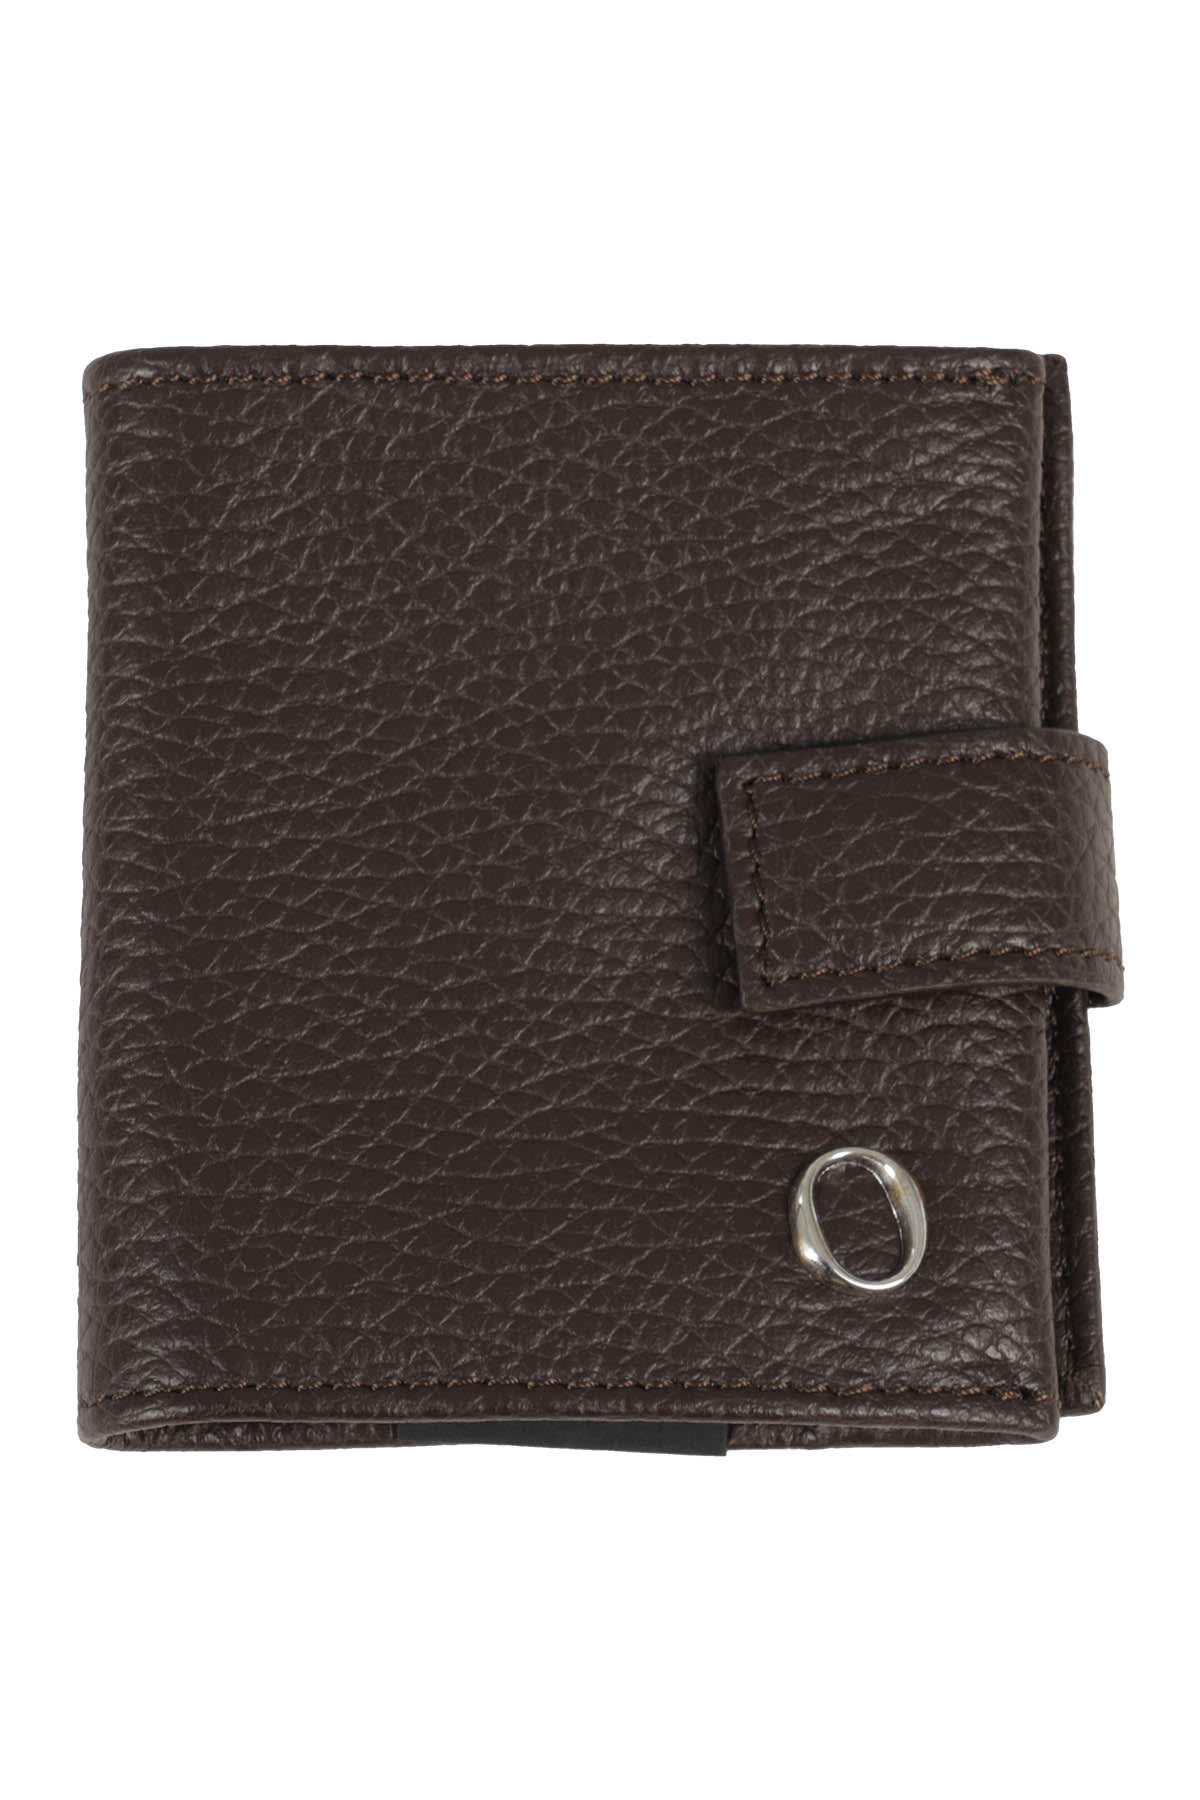 Orciani Leather Wallet In Eba Ebano